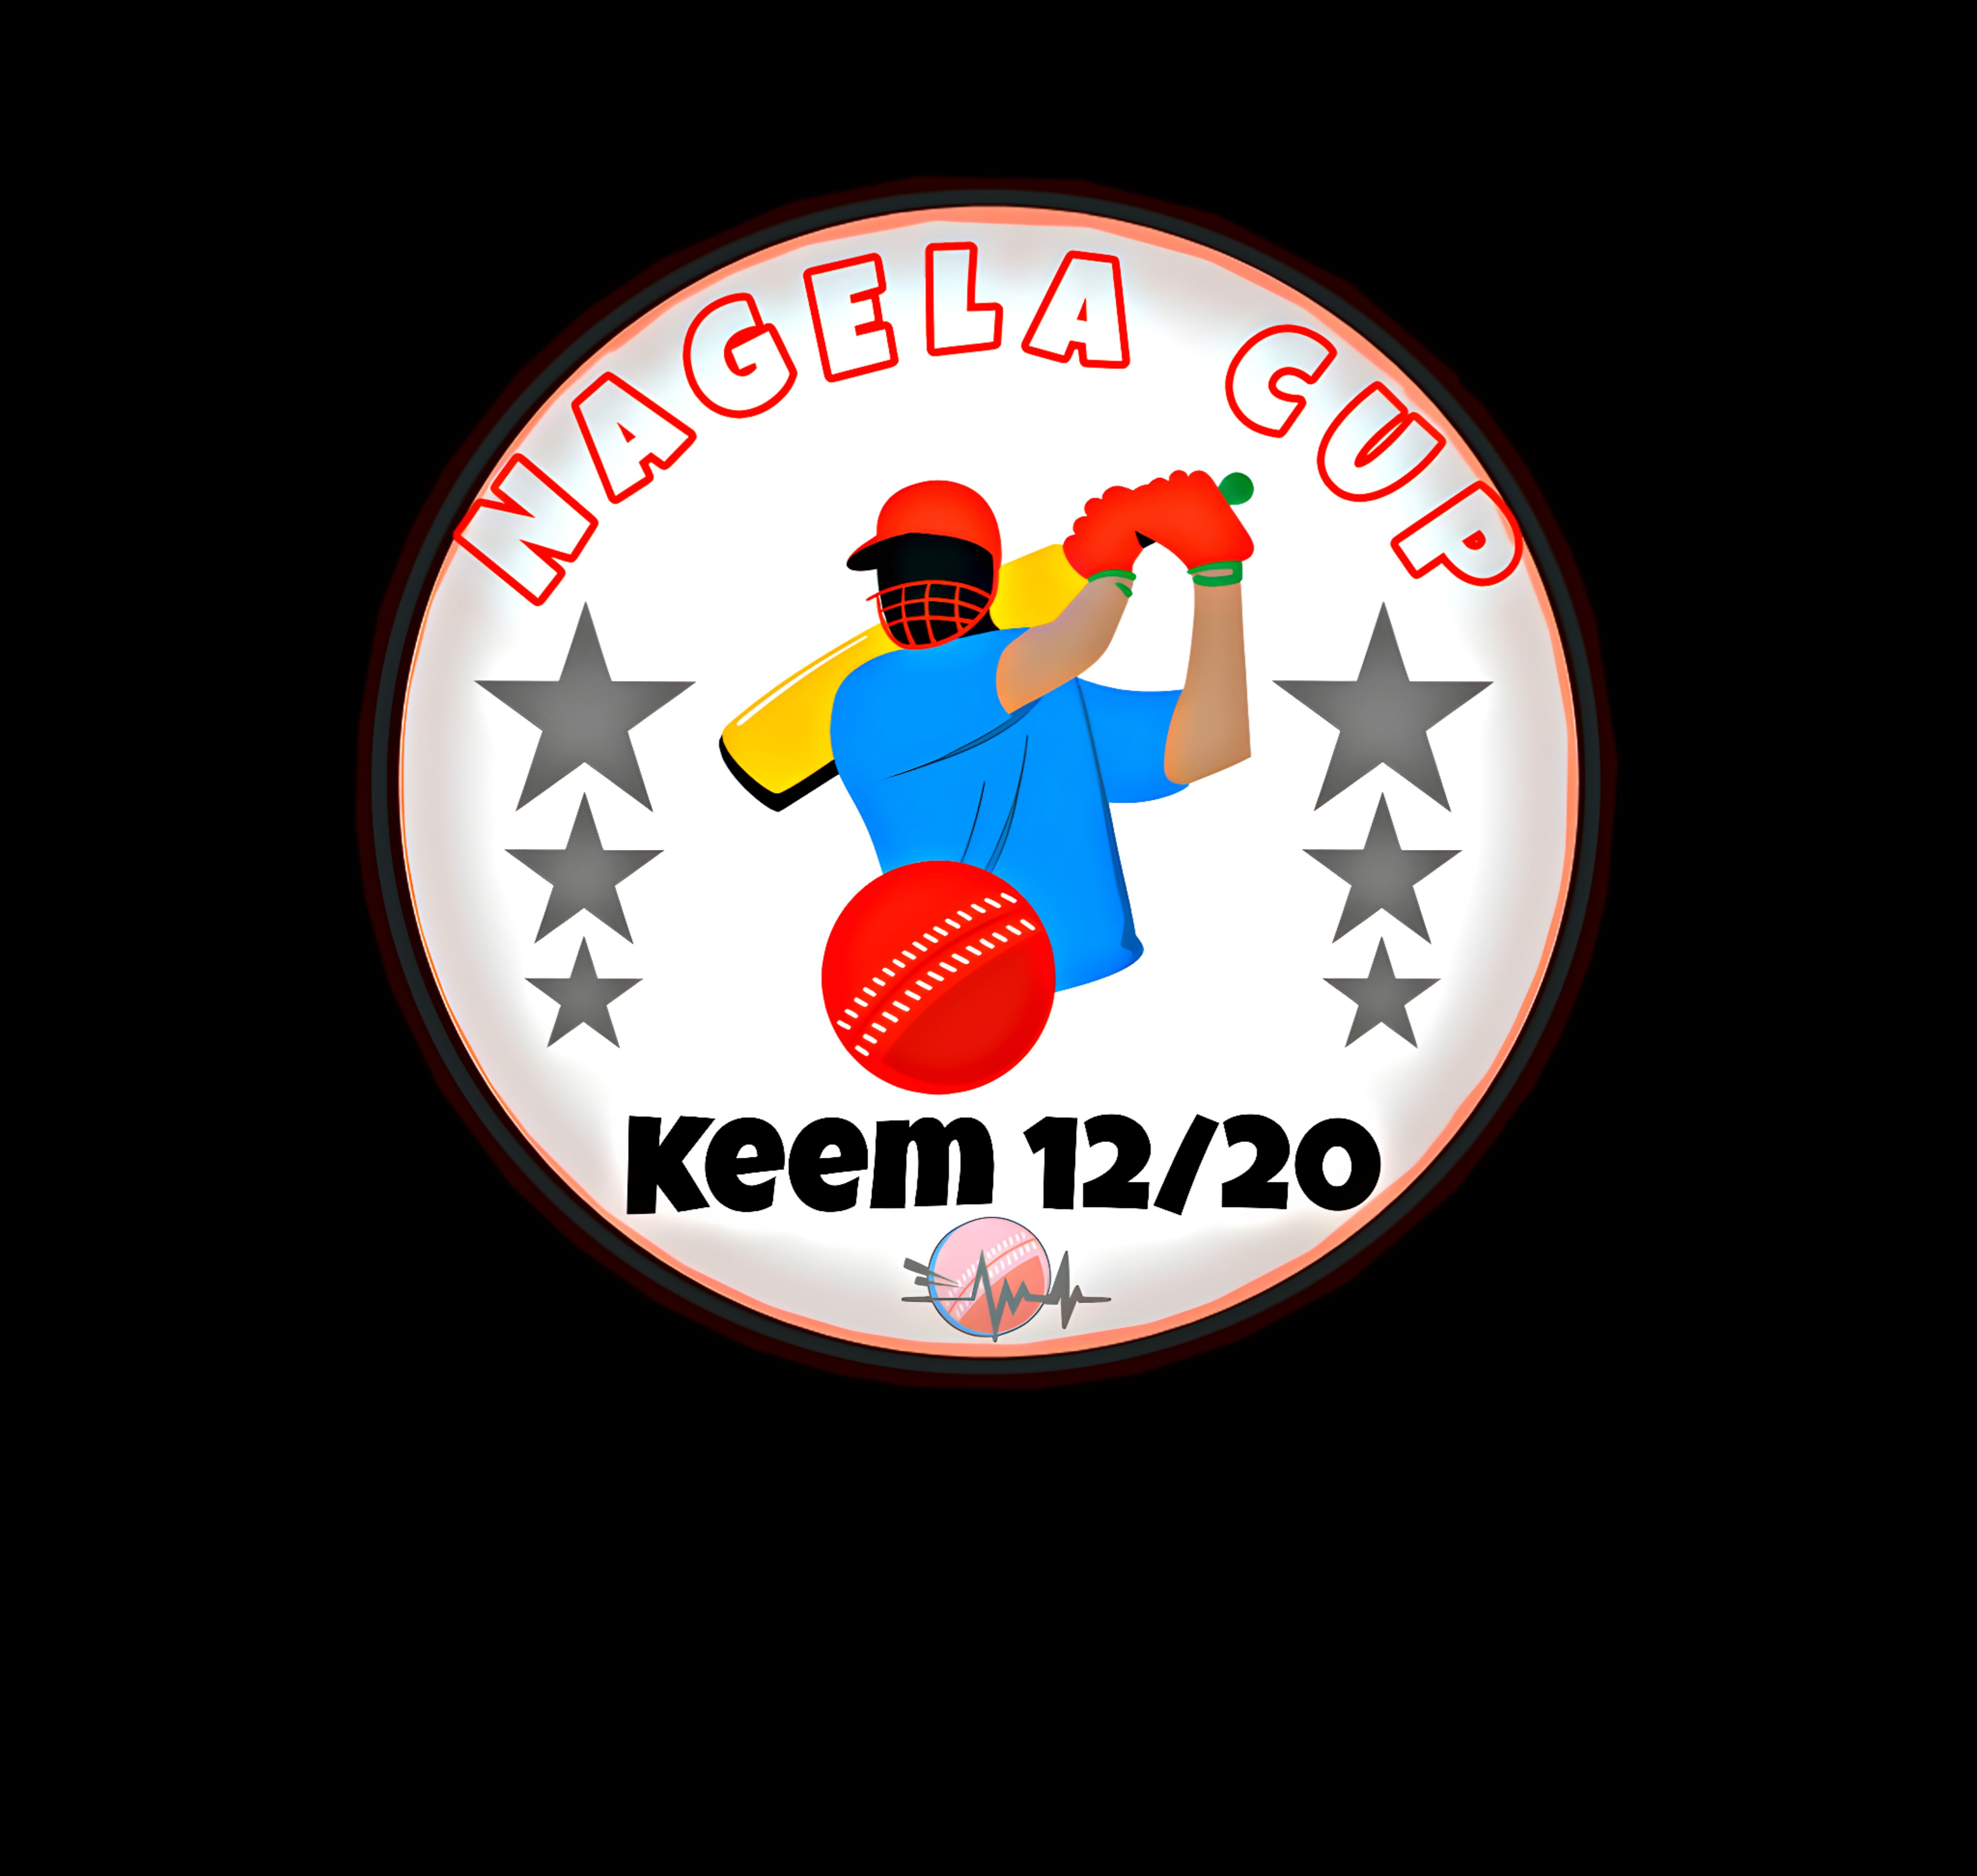 NAGELA CUP KEEM 1220